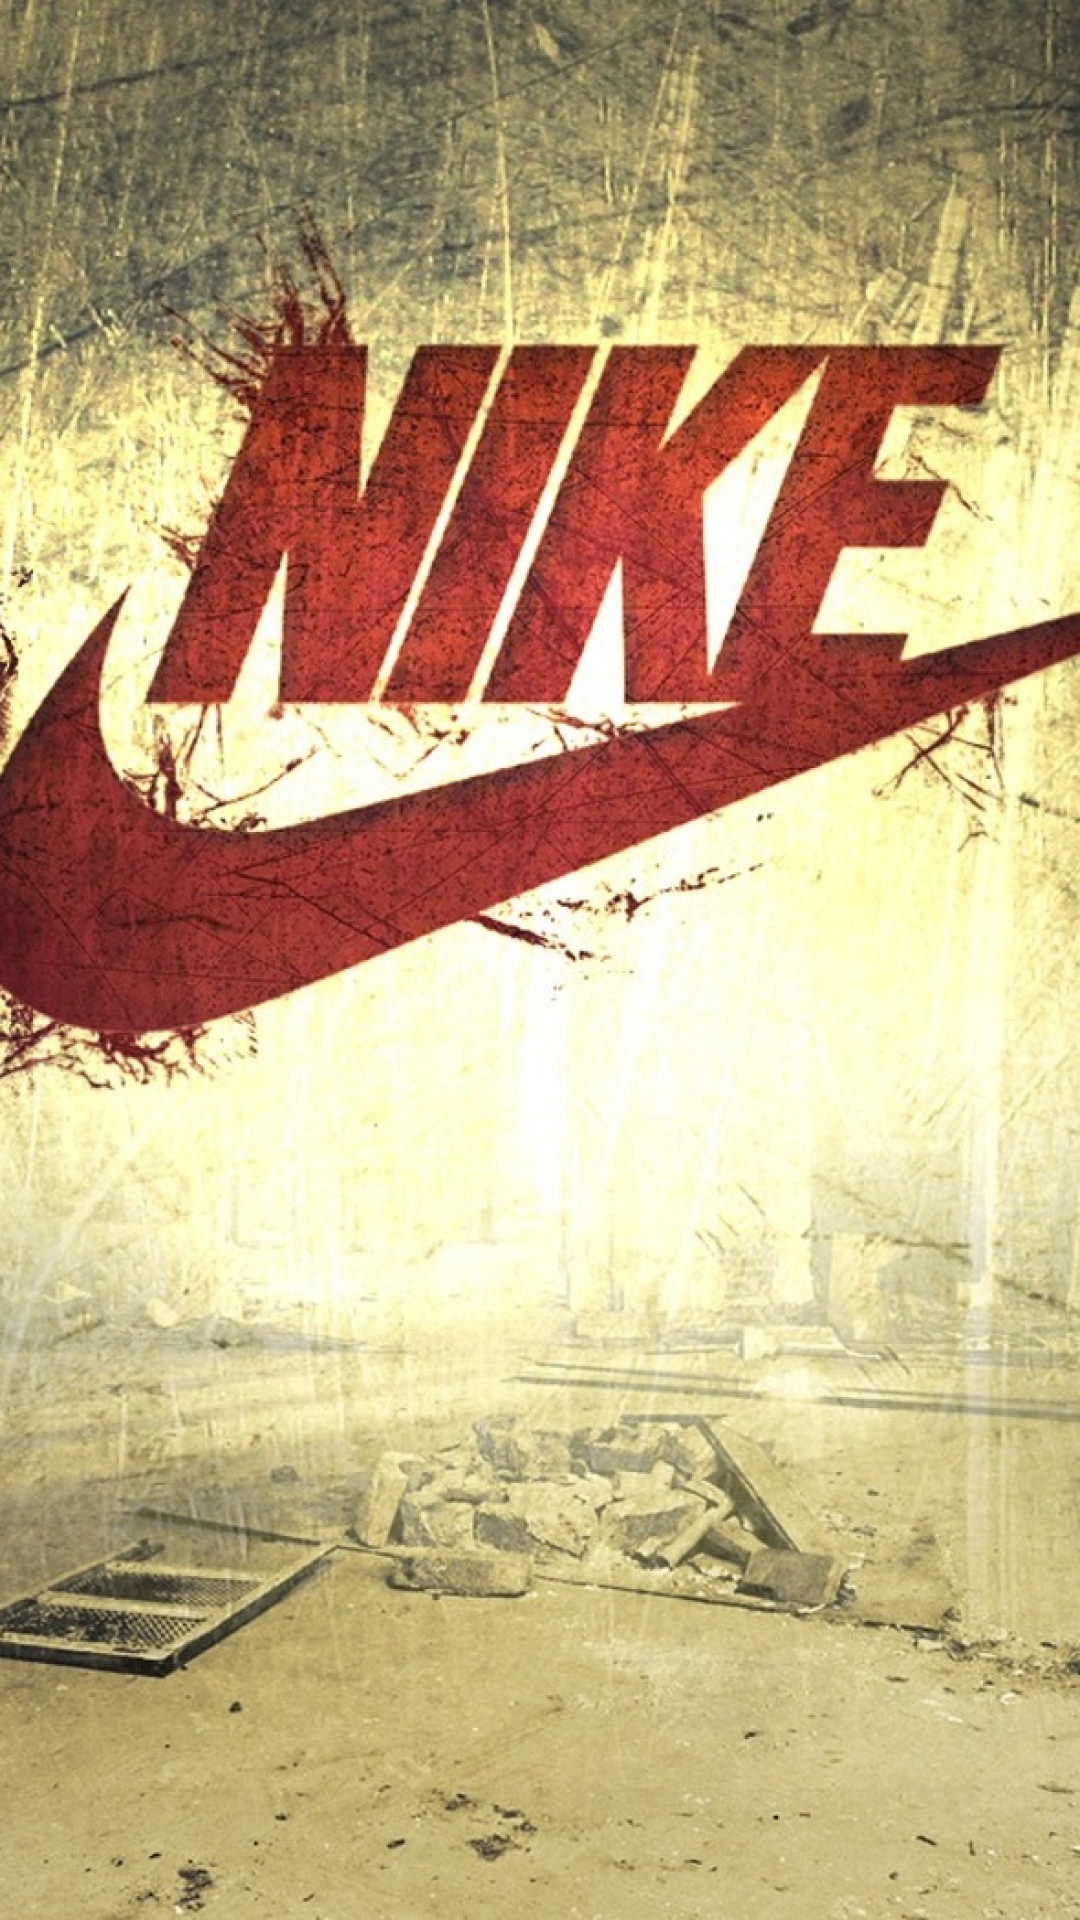 Nike Iphone Hd Wallpapers